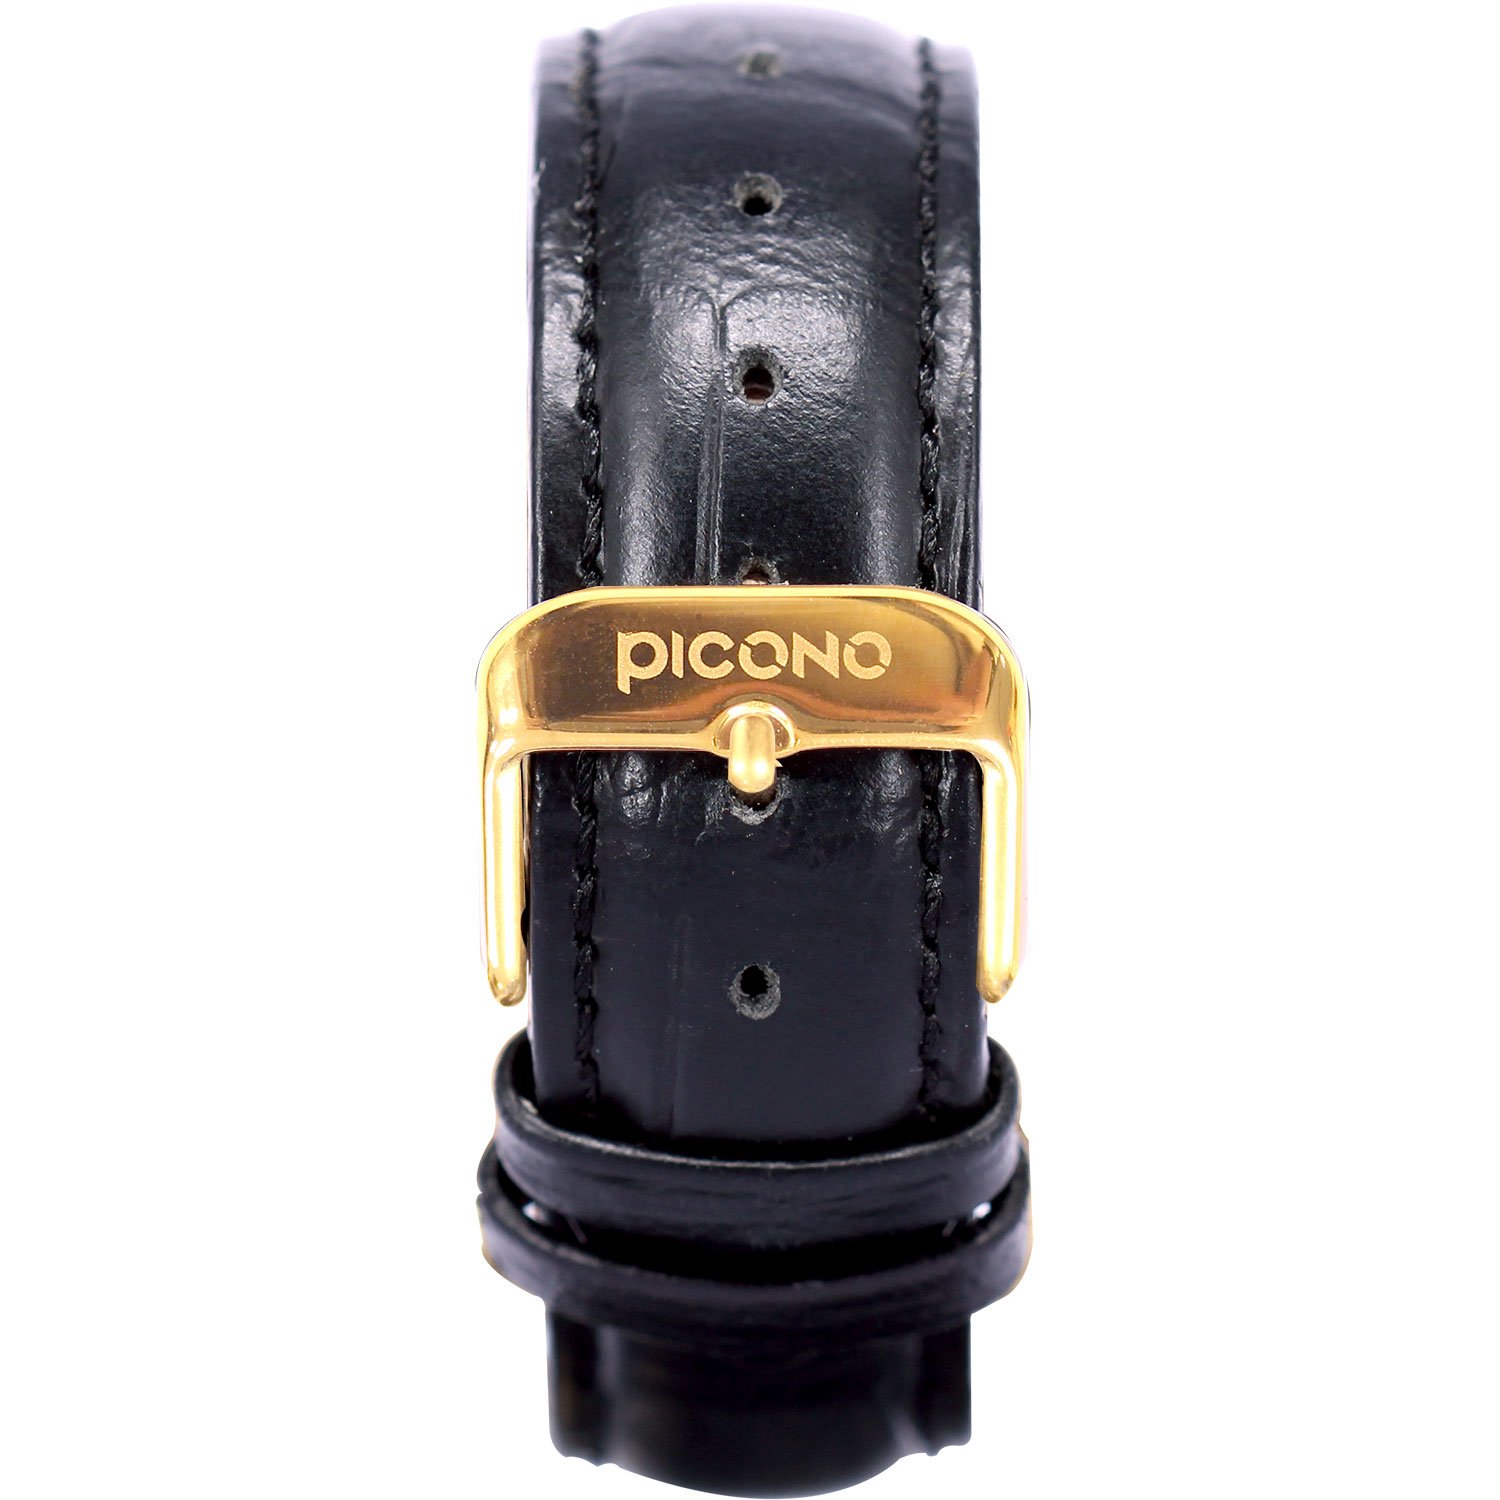 PICONO Mr.&Mrs. Pearl Series - Multi Dial Water Resistant Analog Quartz Watch - No. 4403 (Gold)